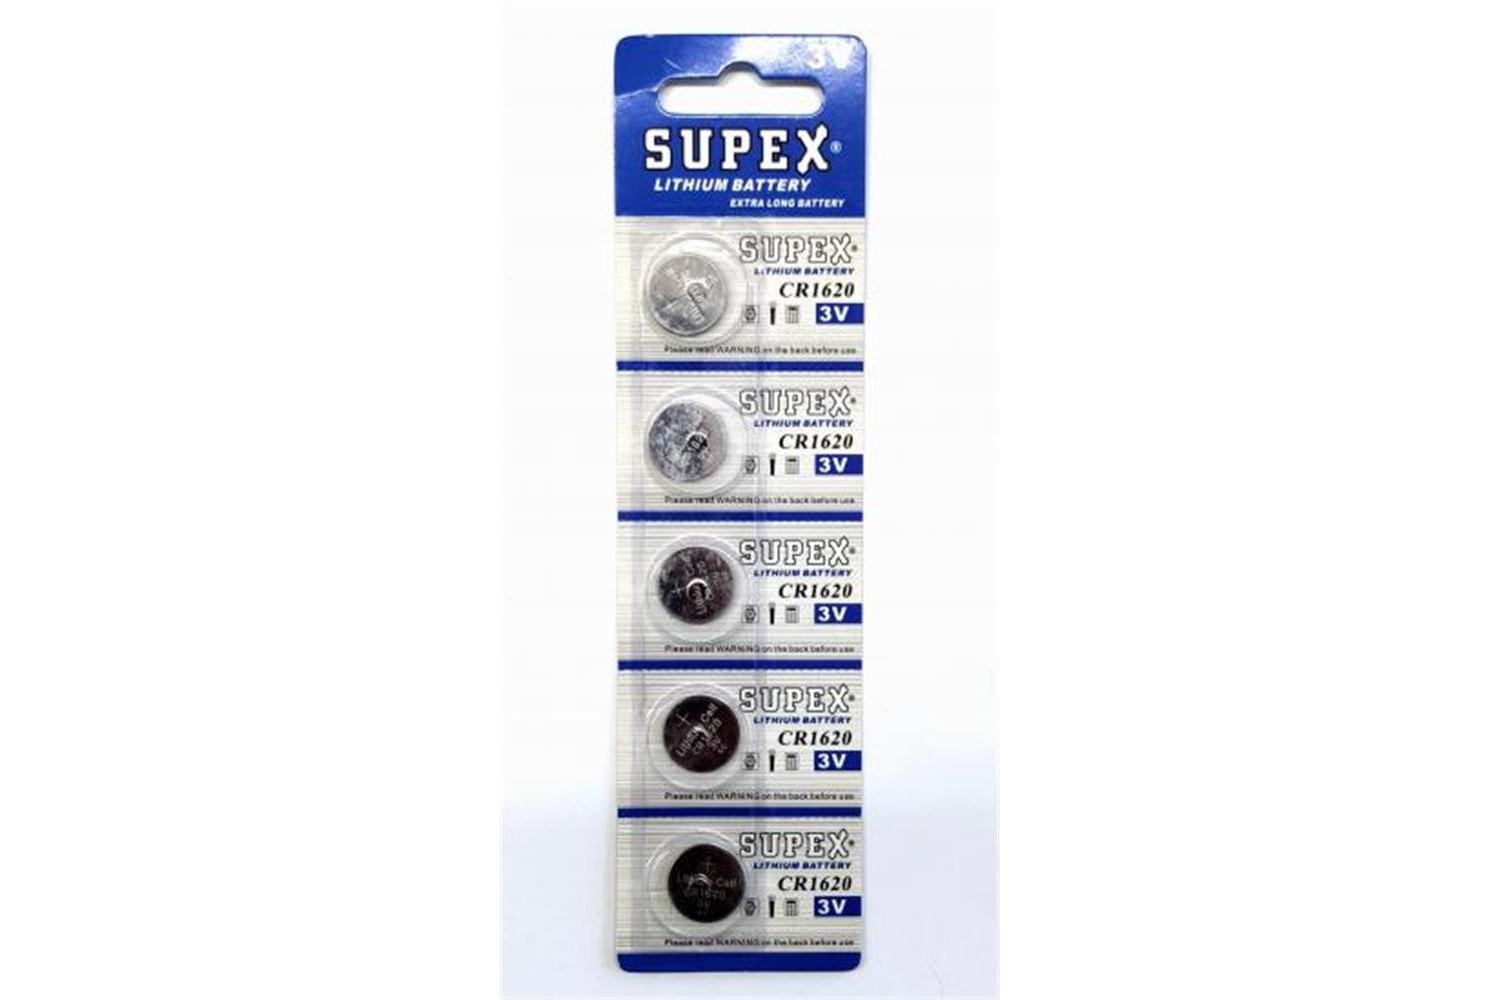 Supex CR1620-C5 3V Lityum Düğme Pil 5'li Paket